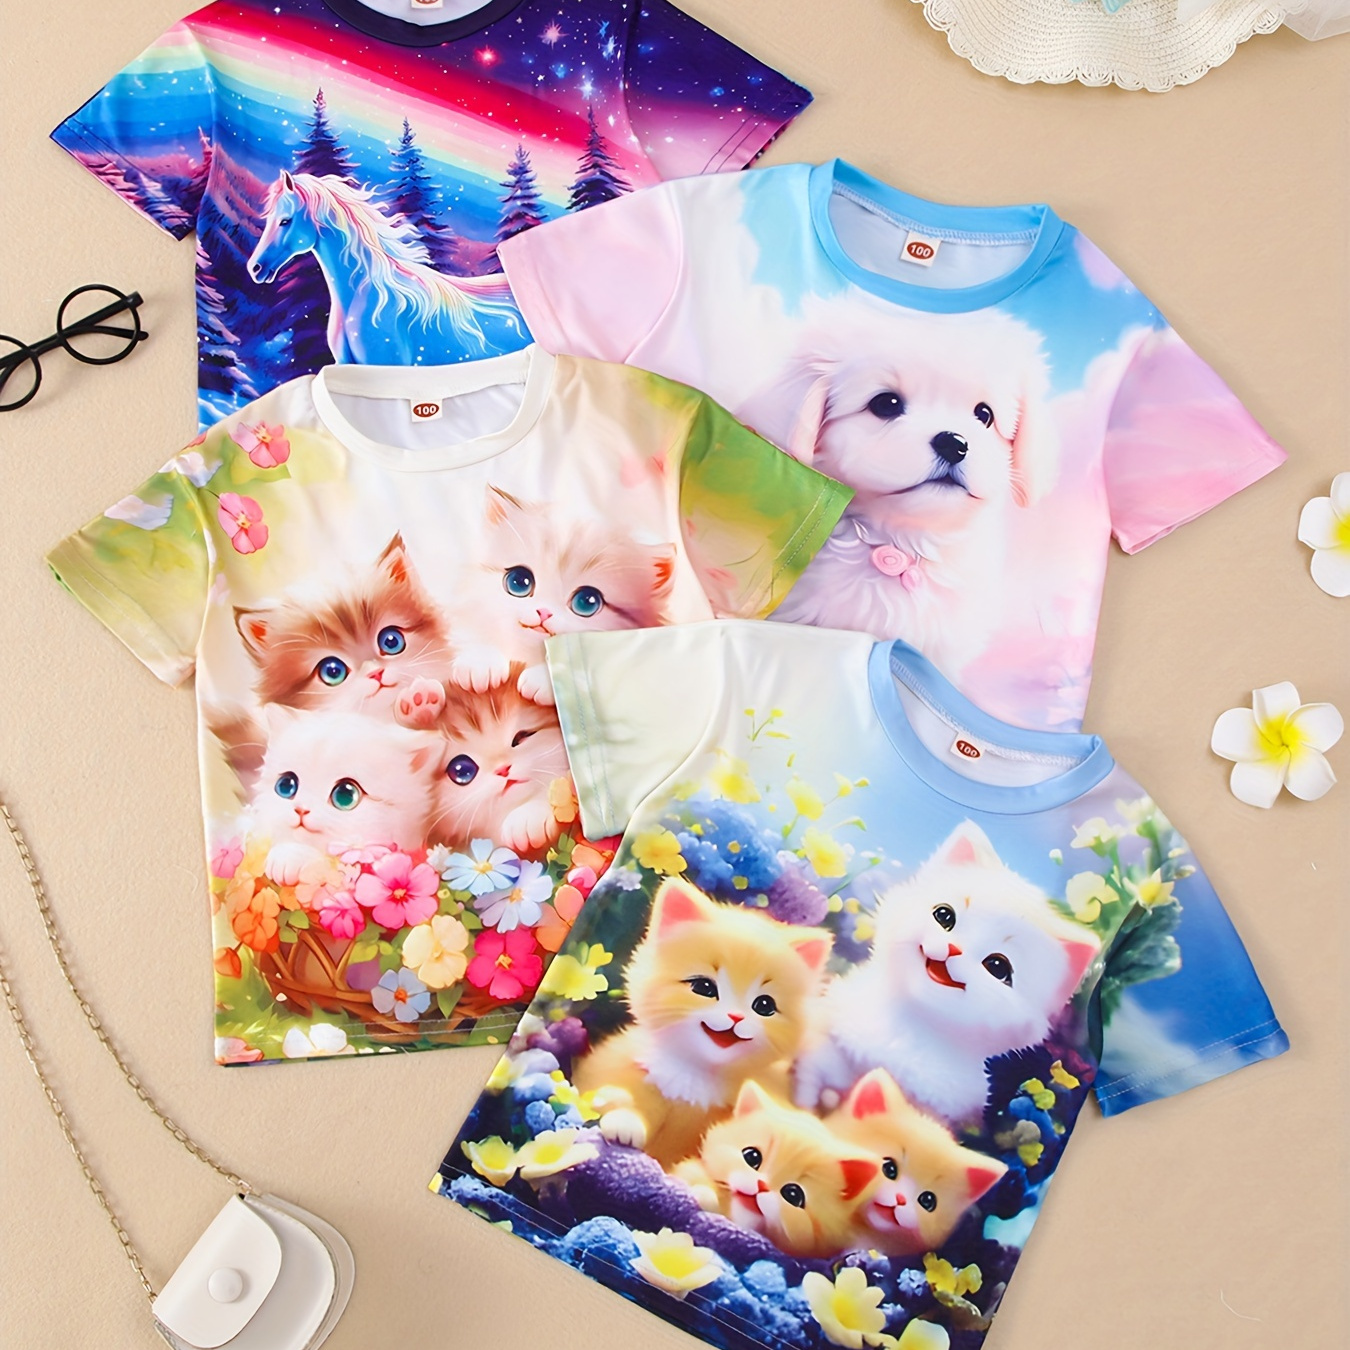 

Girls 4pcs/set Casual & Comfy Cartoon Kittens & Dog & Unicorn Graphic Print Short Sleeve Tees For Summer